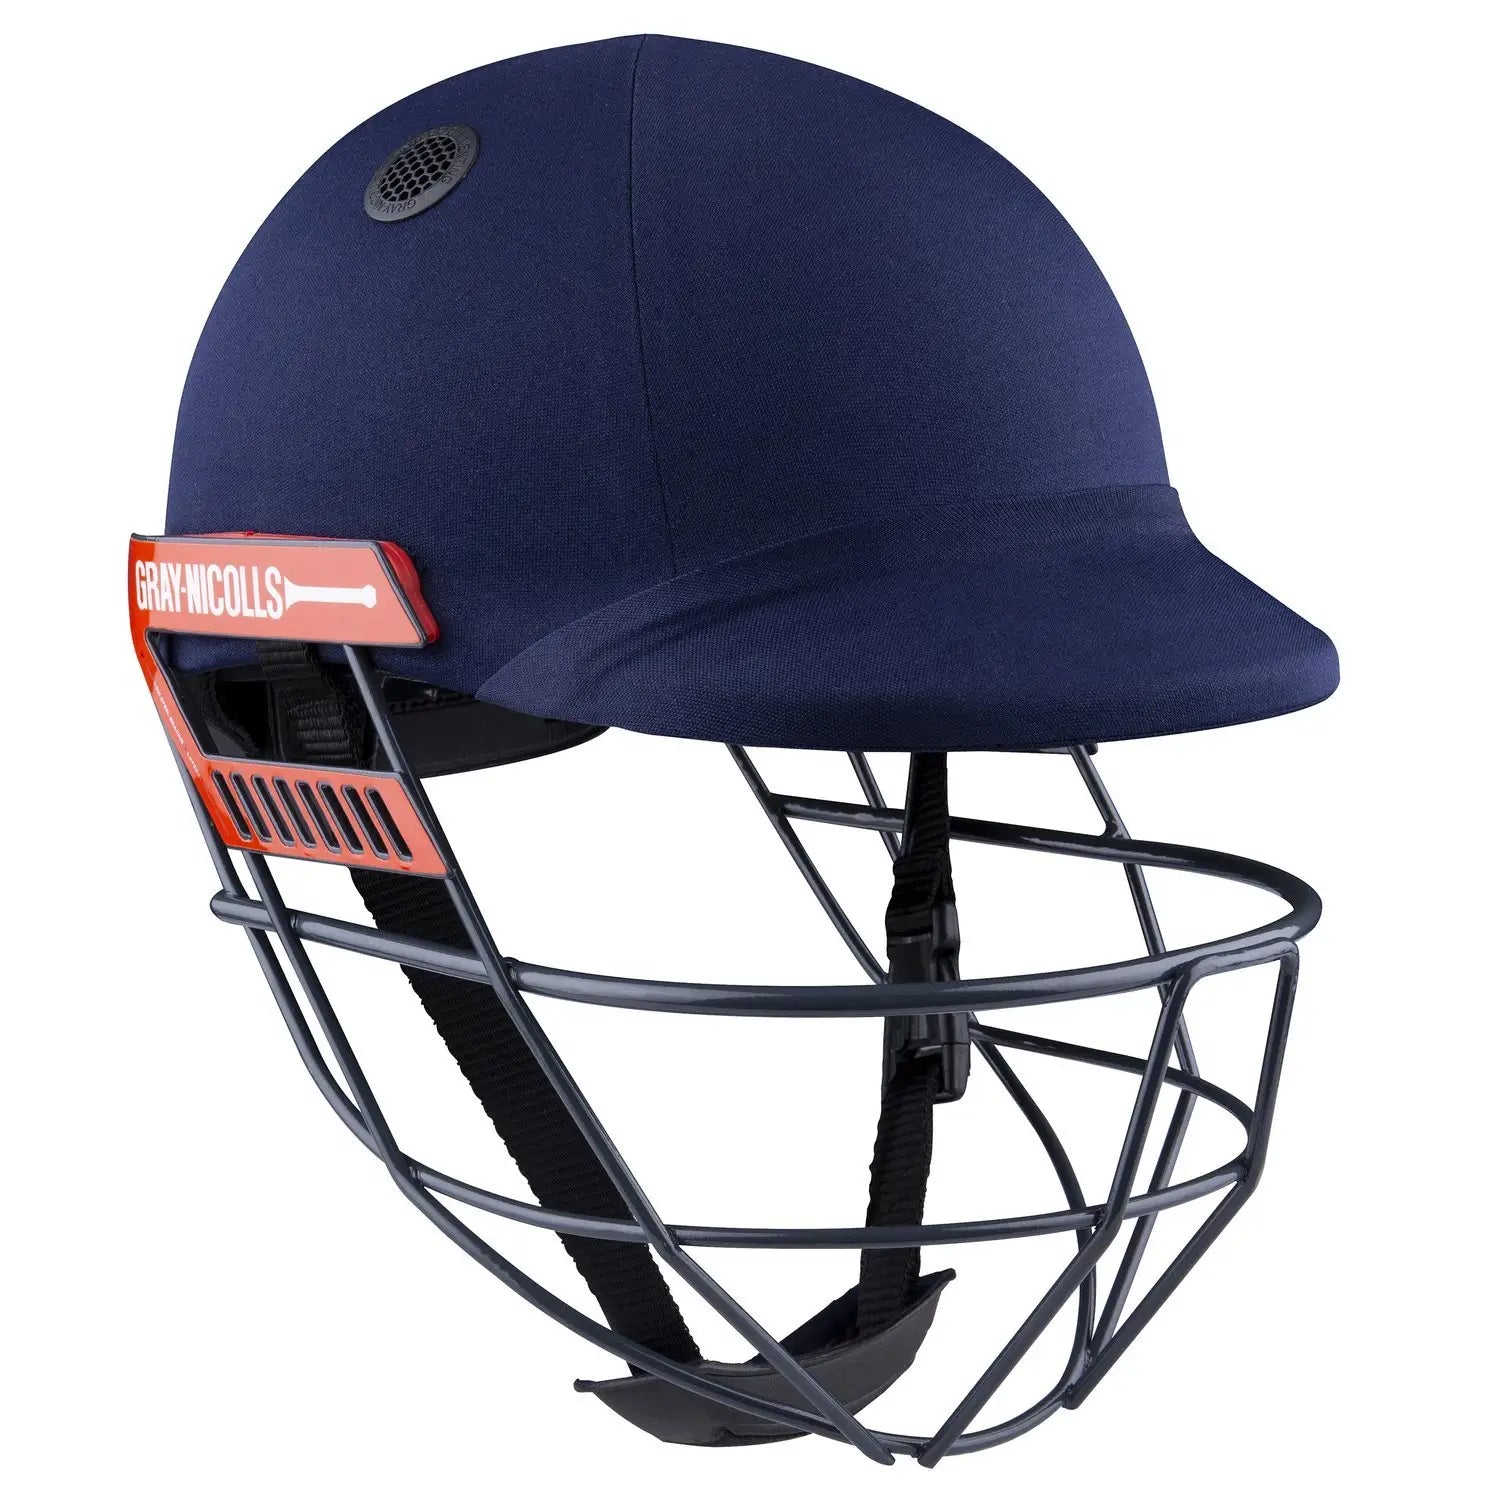 Gray Nicolls Ultimate Cricket Helmet Navy Classic Design Maximum Protection - Medium - HELMETS & HEADGEAR